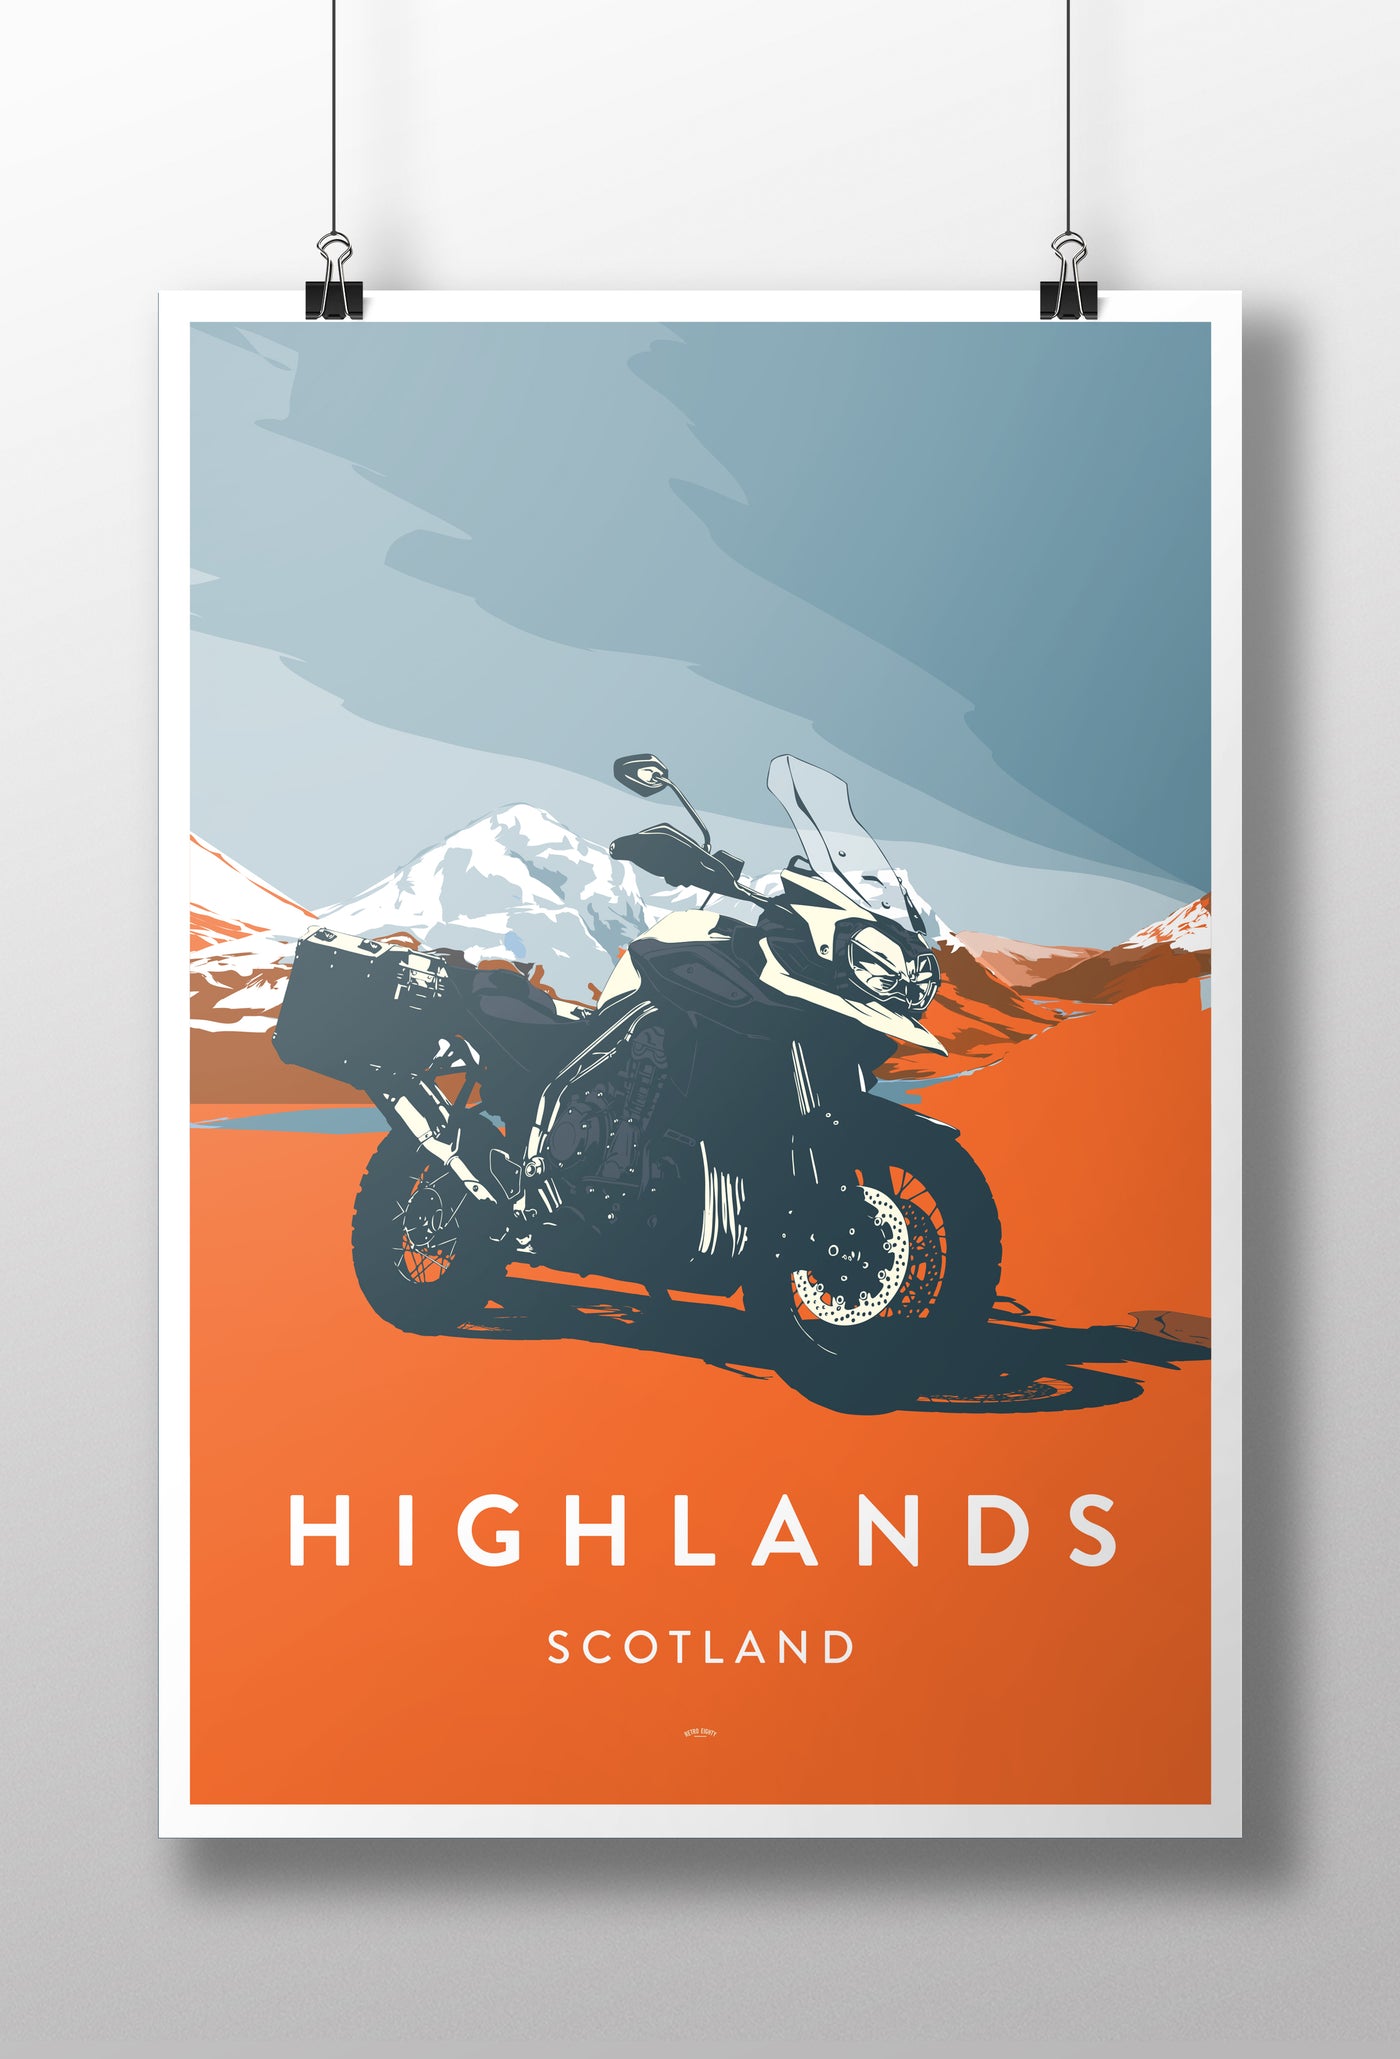 British Adventure Motorcycle 'Highlands' print